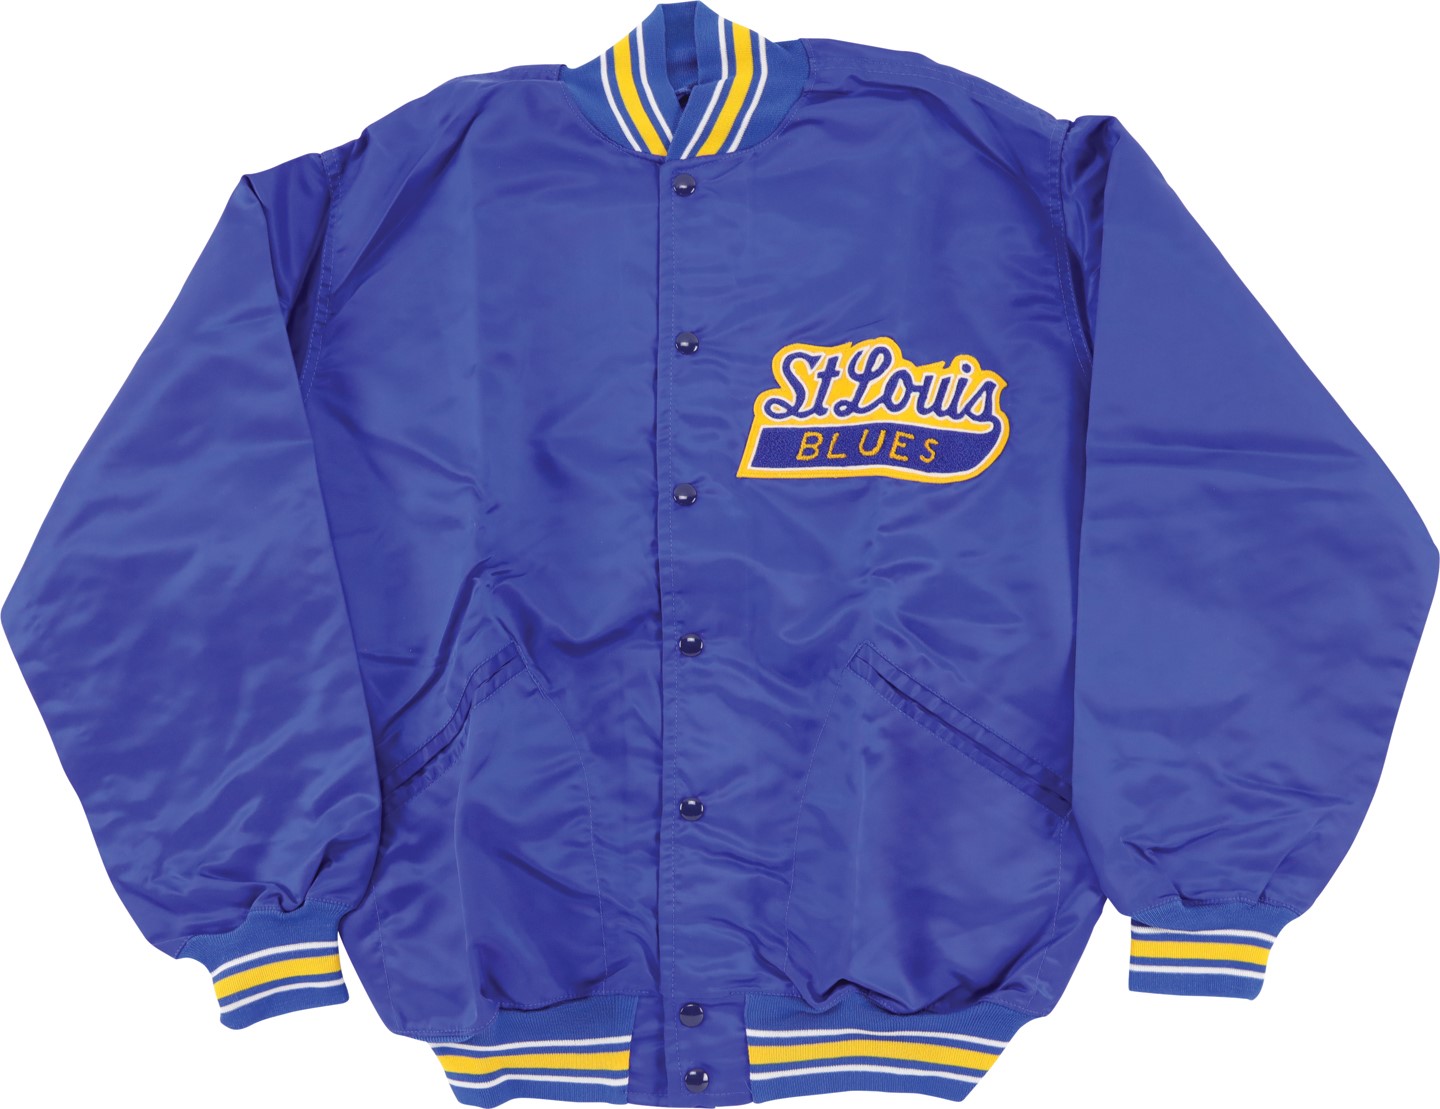 Hockey - 1970s St. Louis Blues Team-Issued Jacket